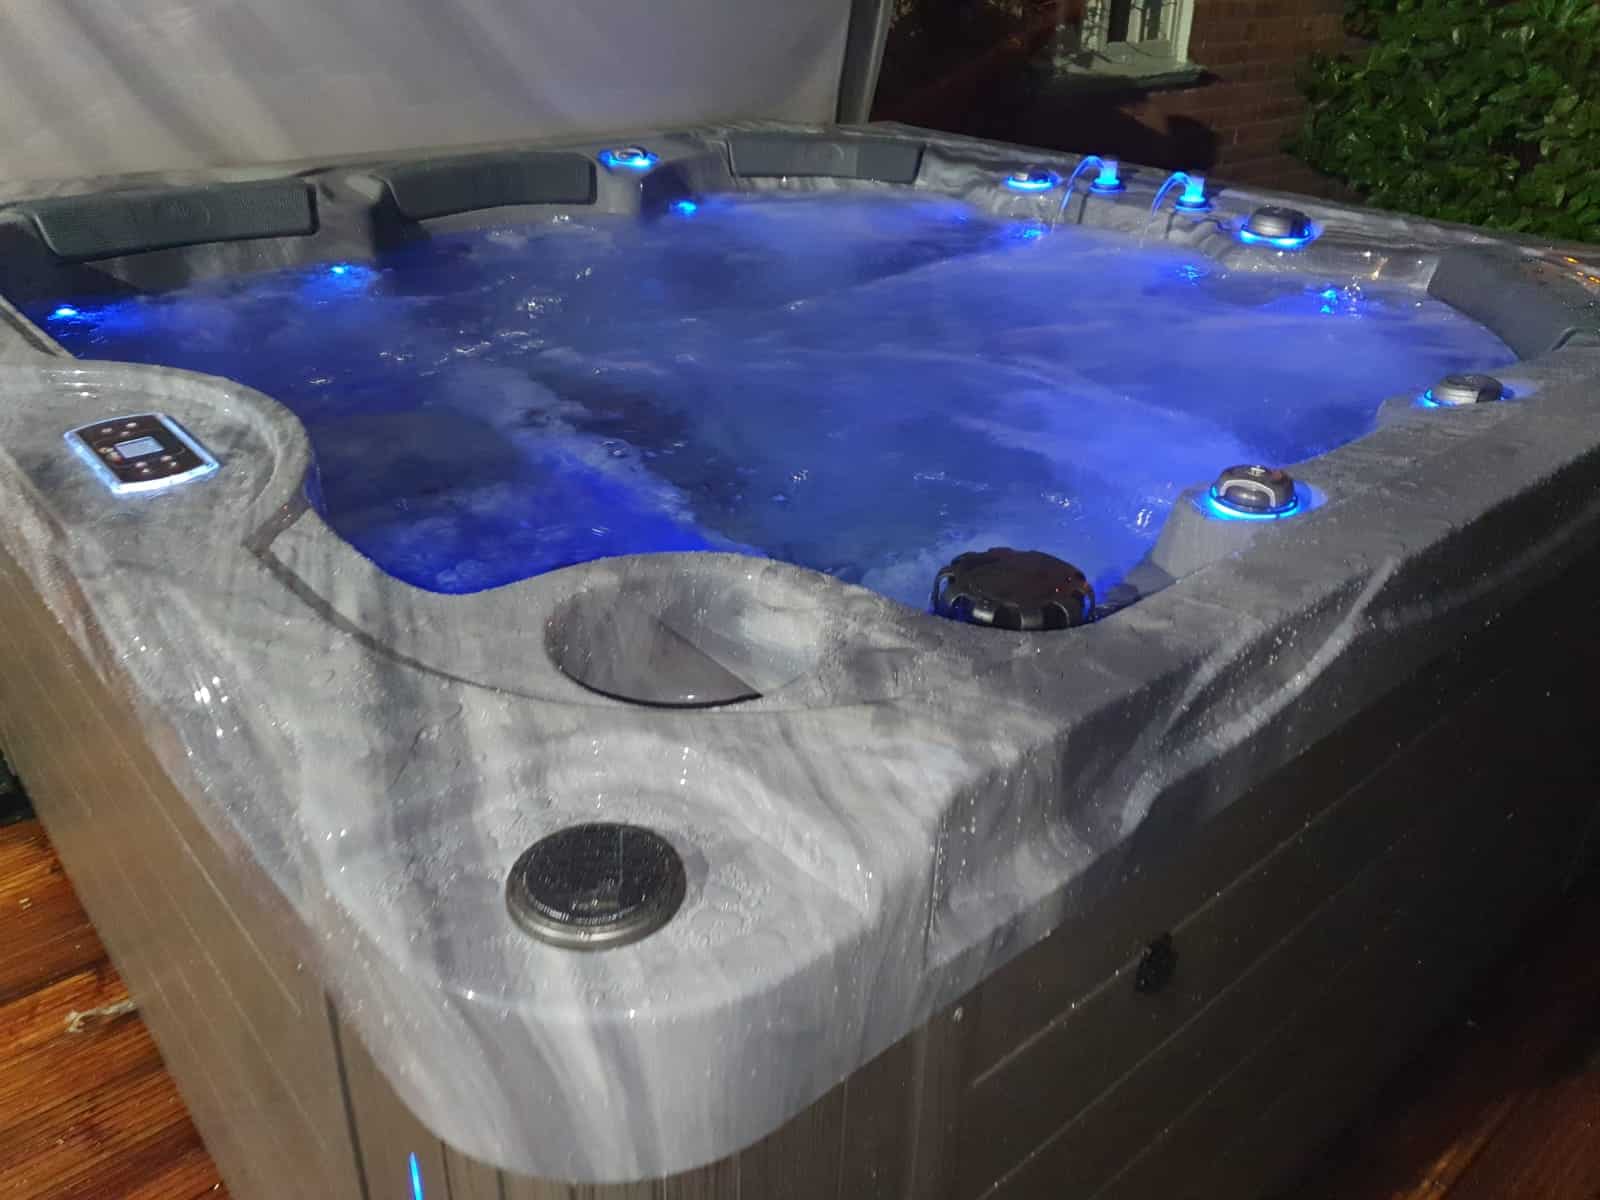 Fiji Hot tub review